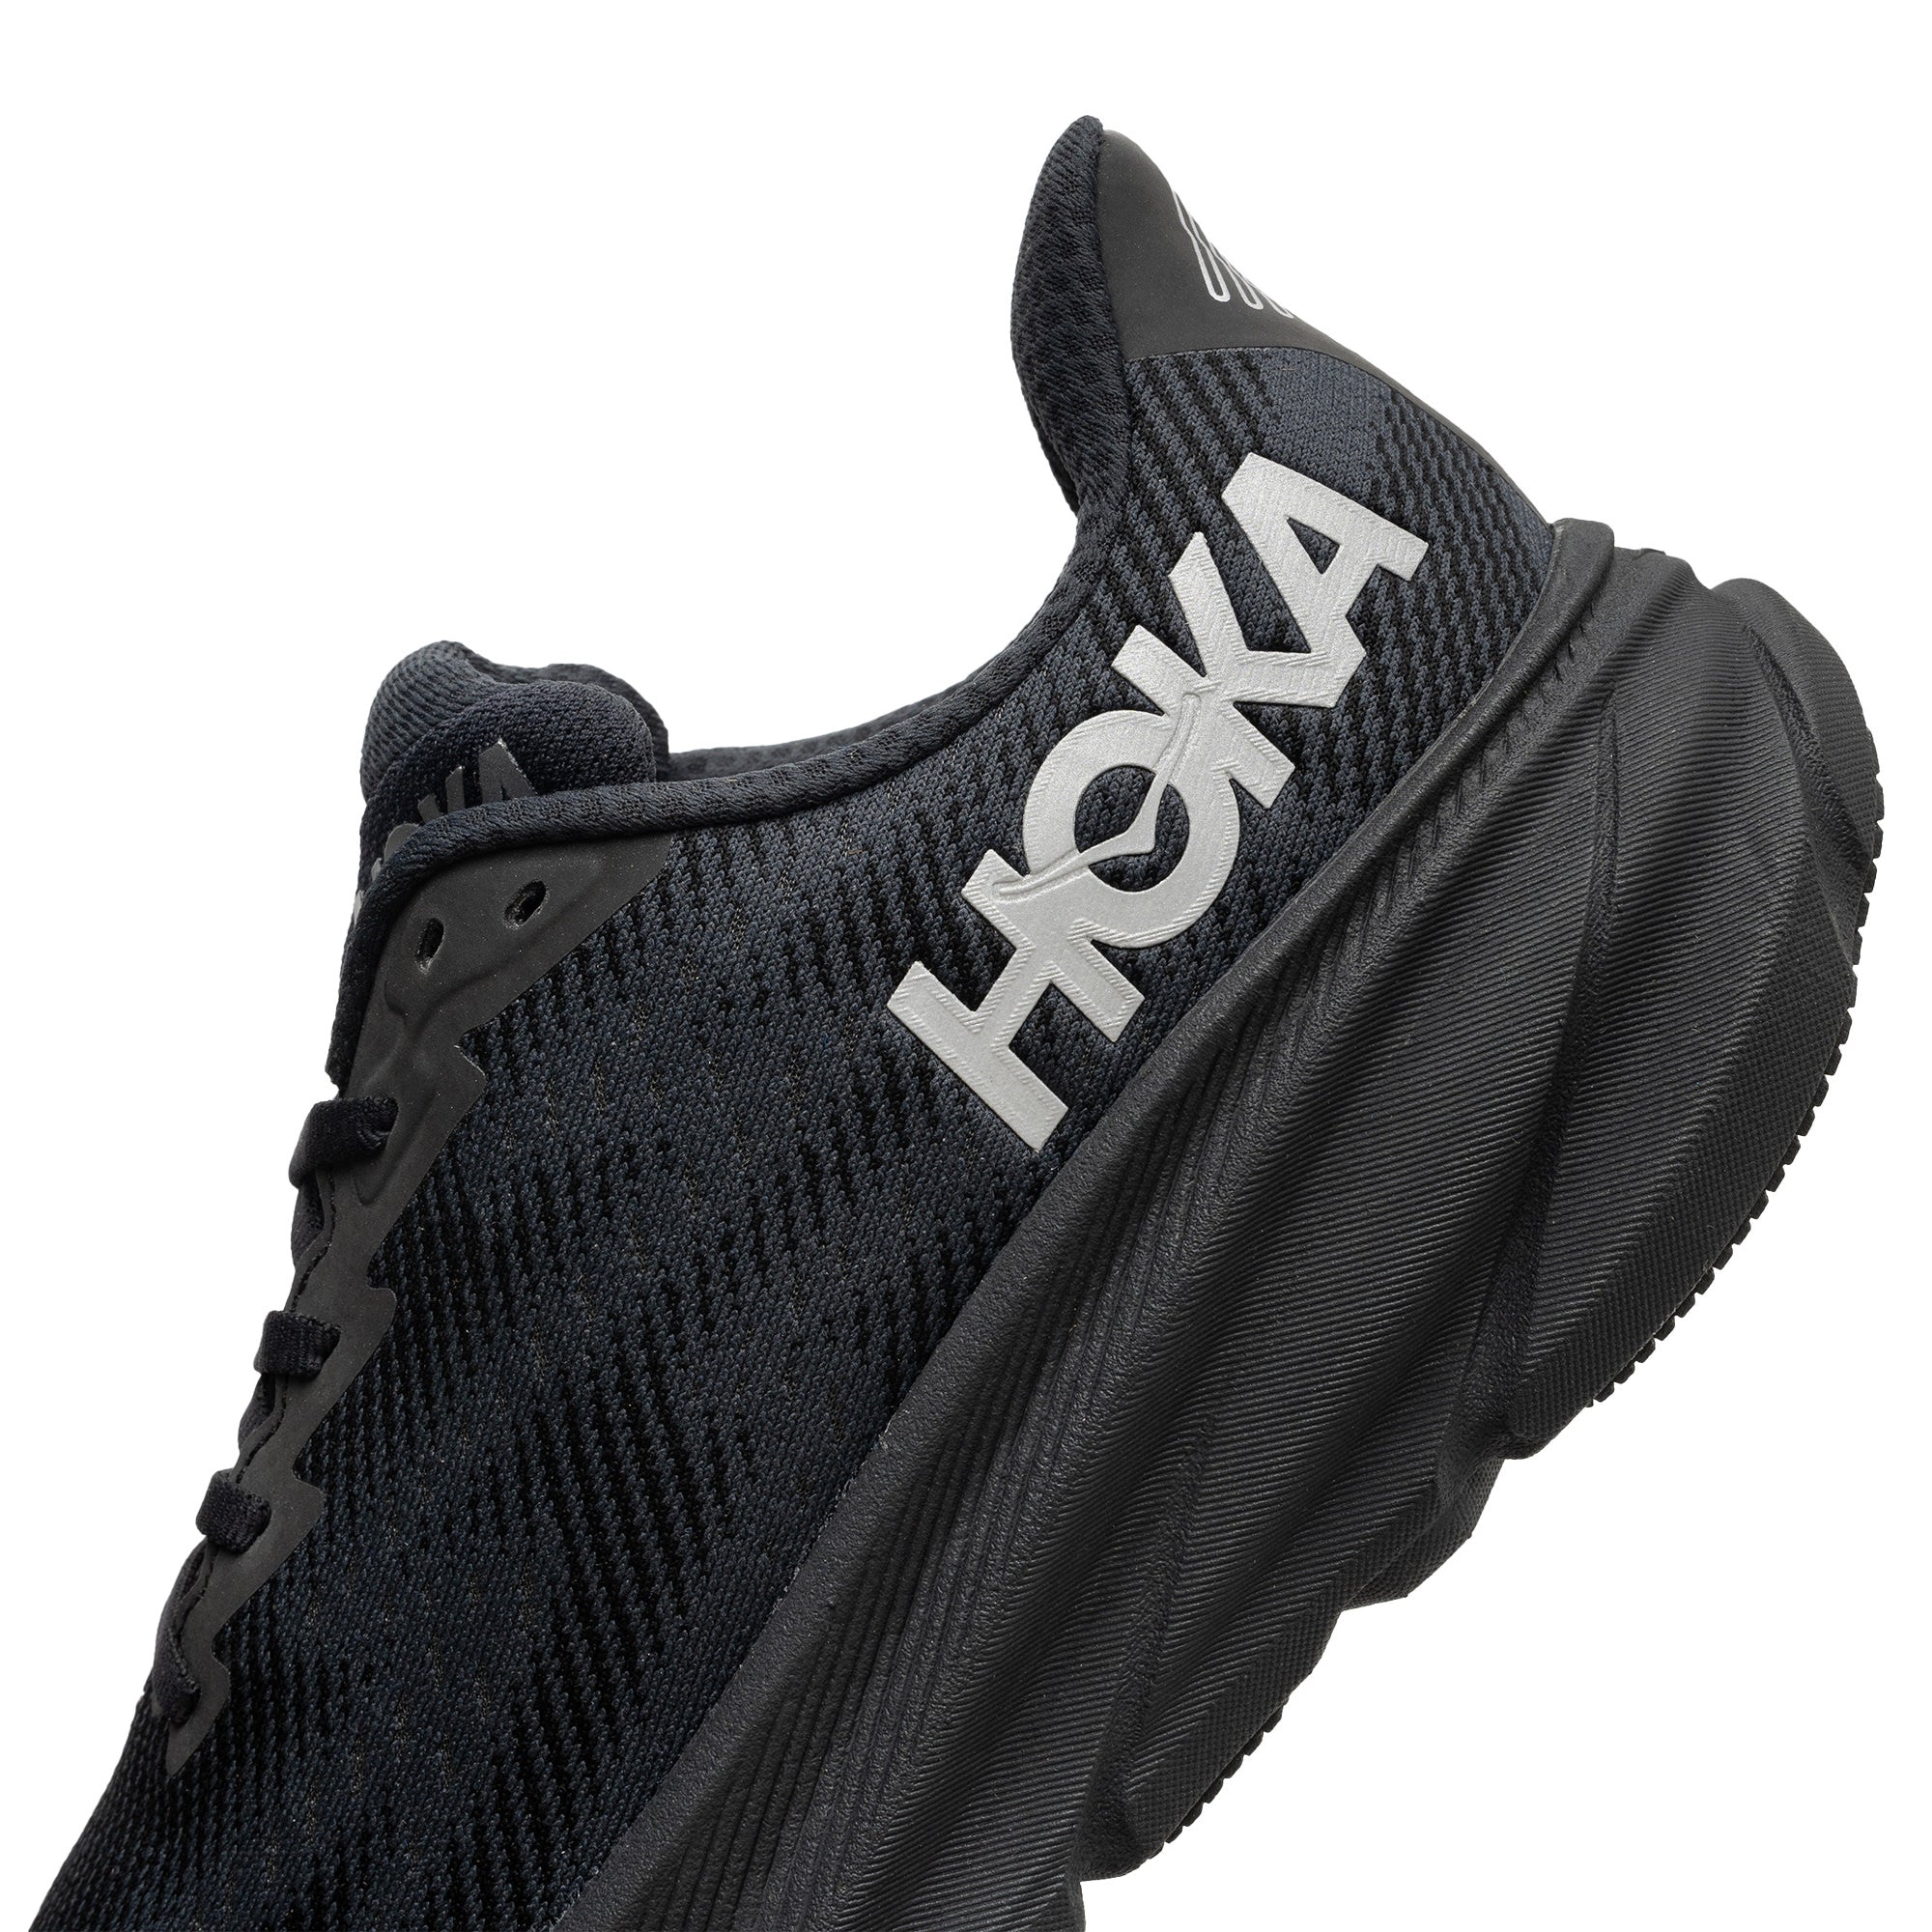 Shoes HOKA ONE ONE Speedgoat 4 Gtx GORE-TEX 1106531 Adgg